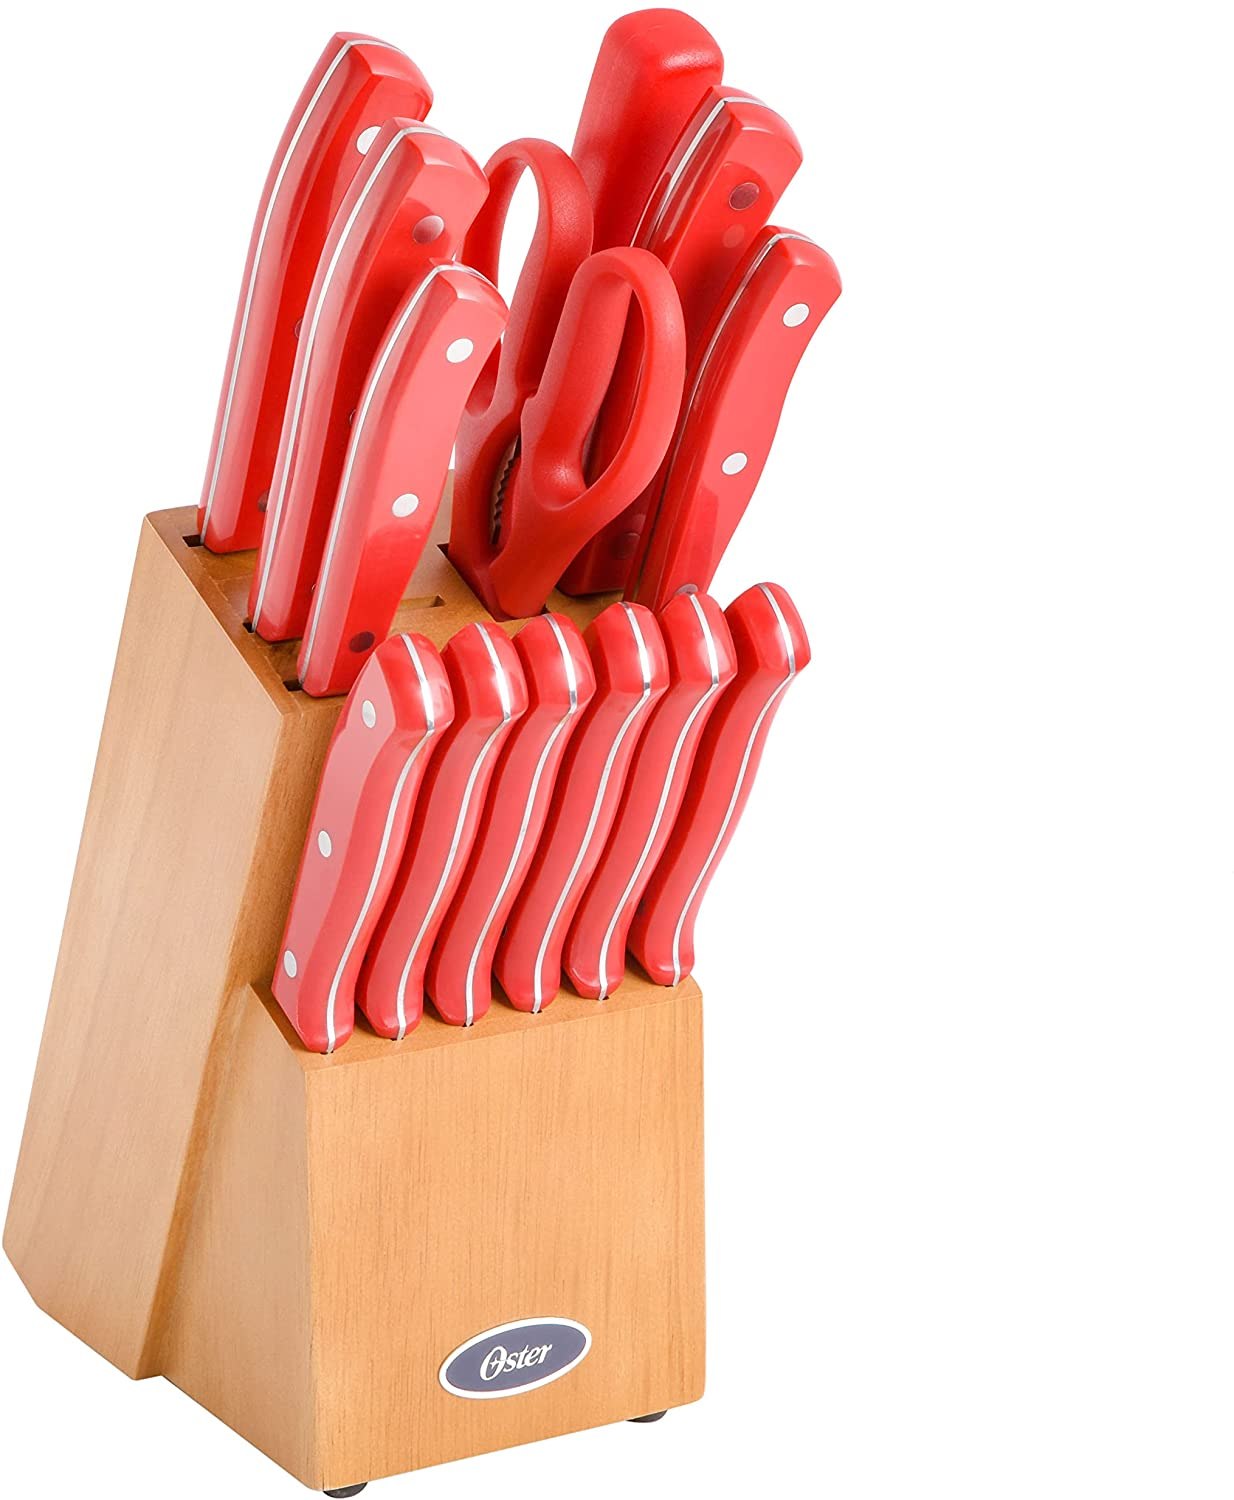 Oster Evansville 14 Piece Stainless Steel Cutlery Block Set (Red Handles) $21.29